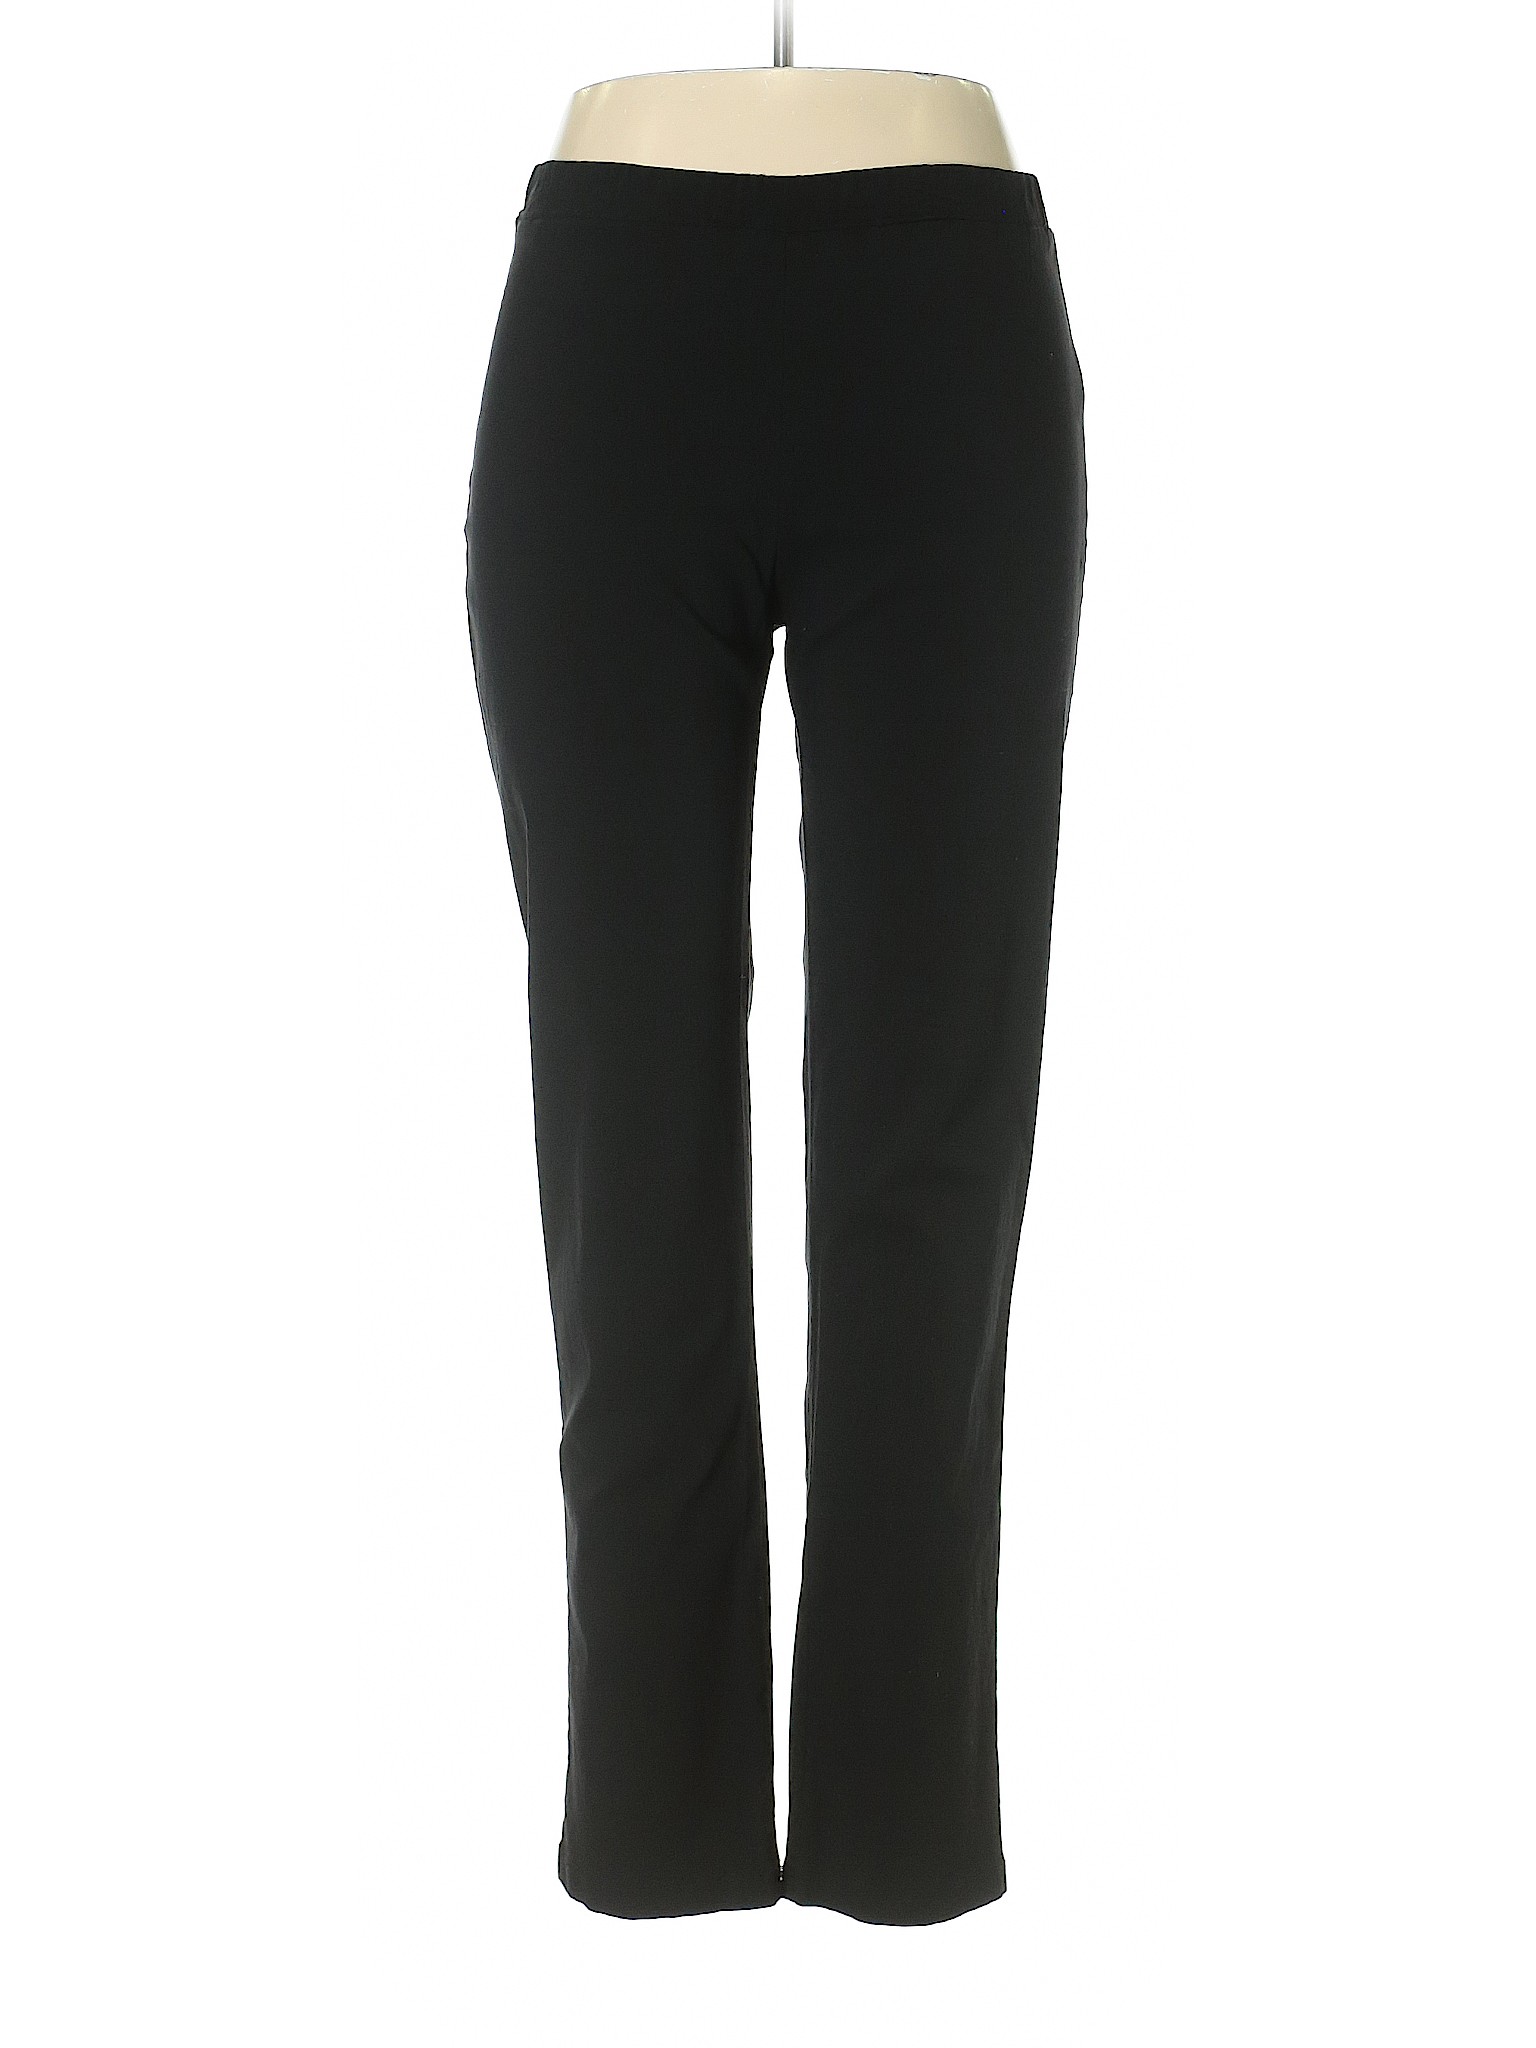 Clara Sun Woo Solid Black Casual Pants Size 1X (Plus) - 60% off | thredUP